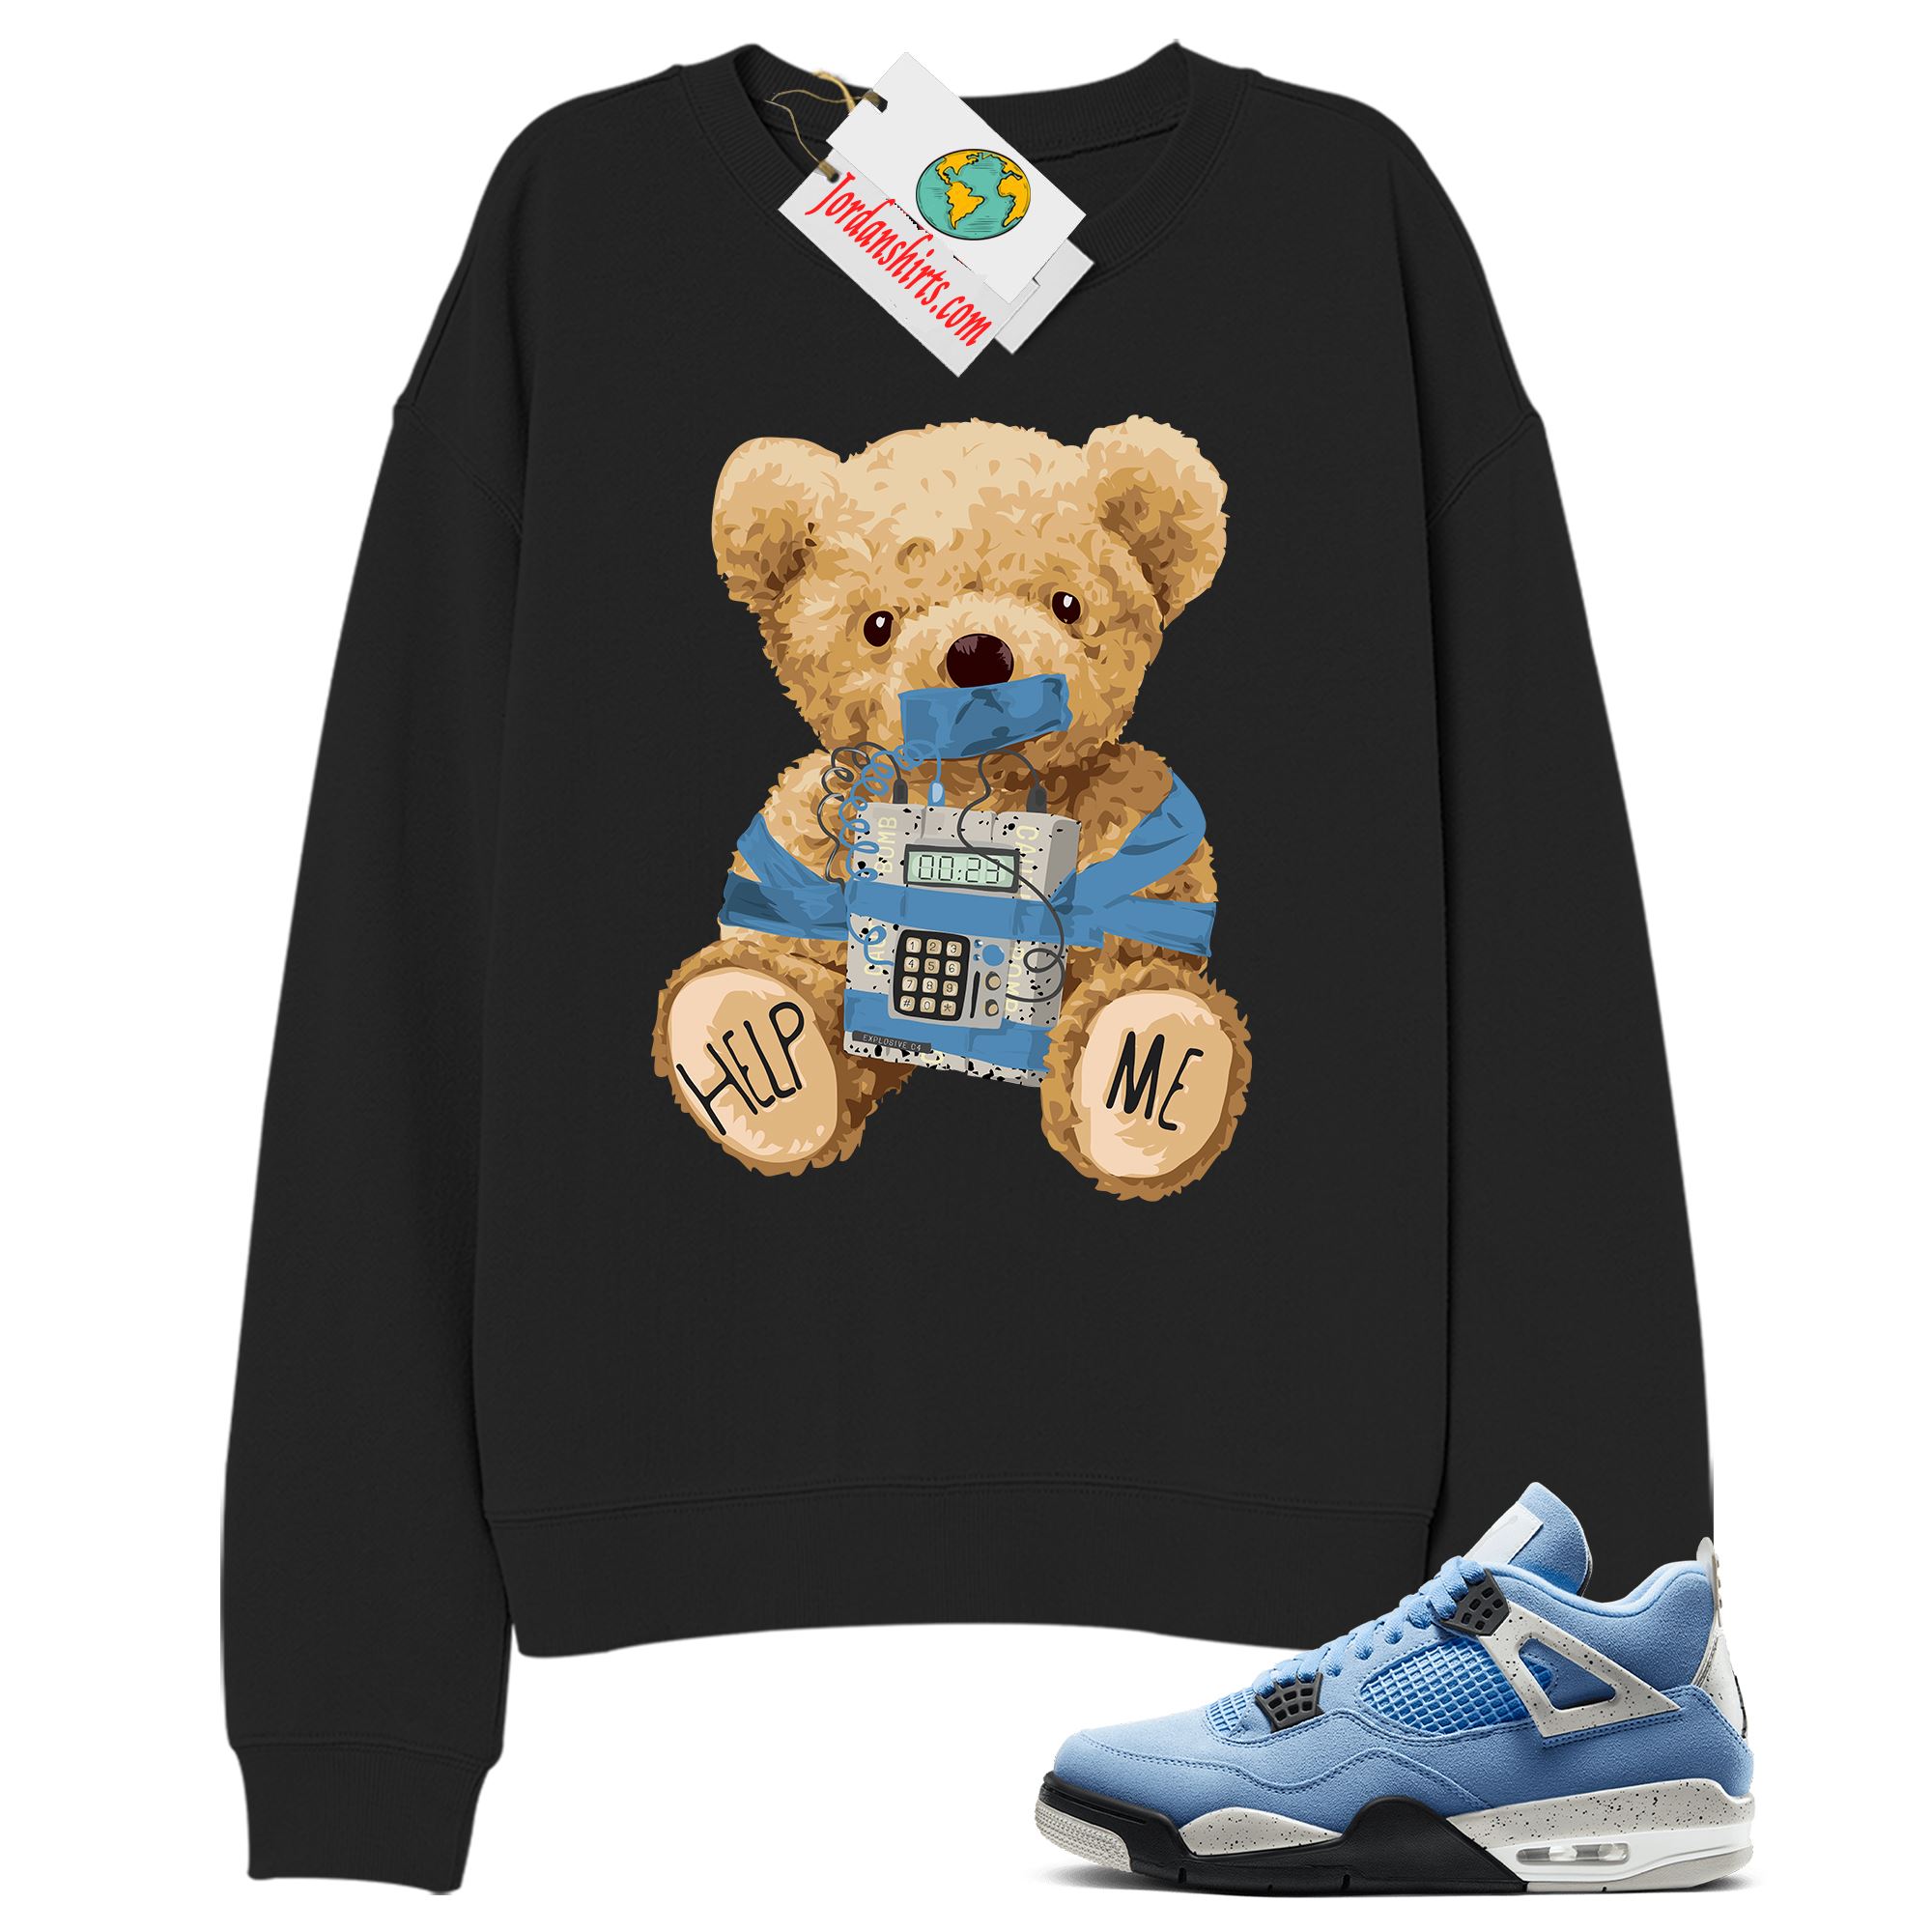 Jordan 4 Sweatshirt, Teddy Bear Bomb Black Sweatshirt Air Jordan 4 University Blue 4s Full Size Up To 5xl